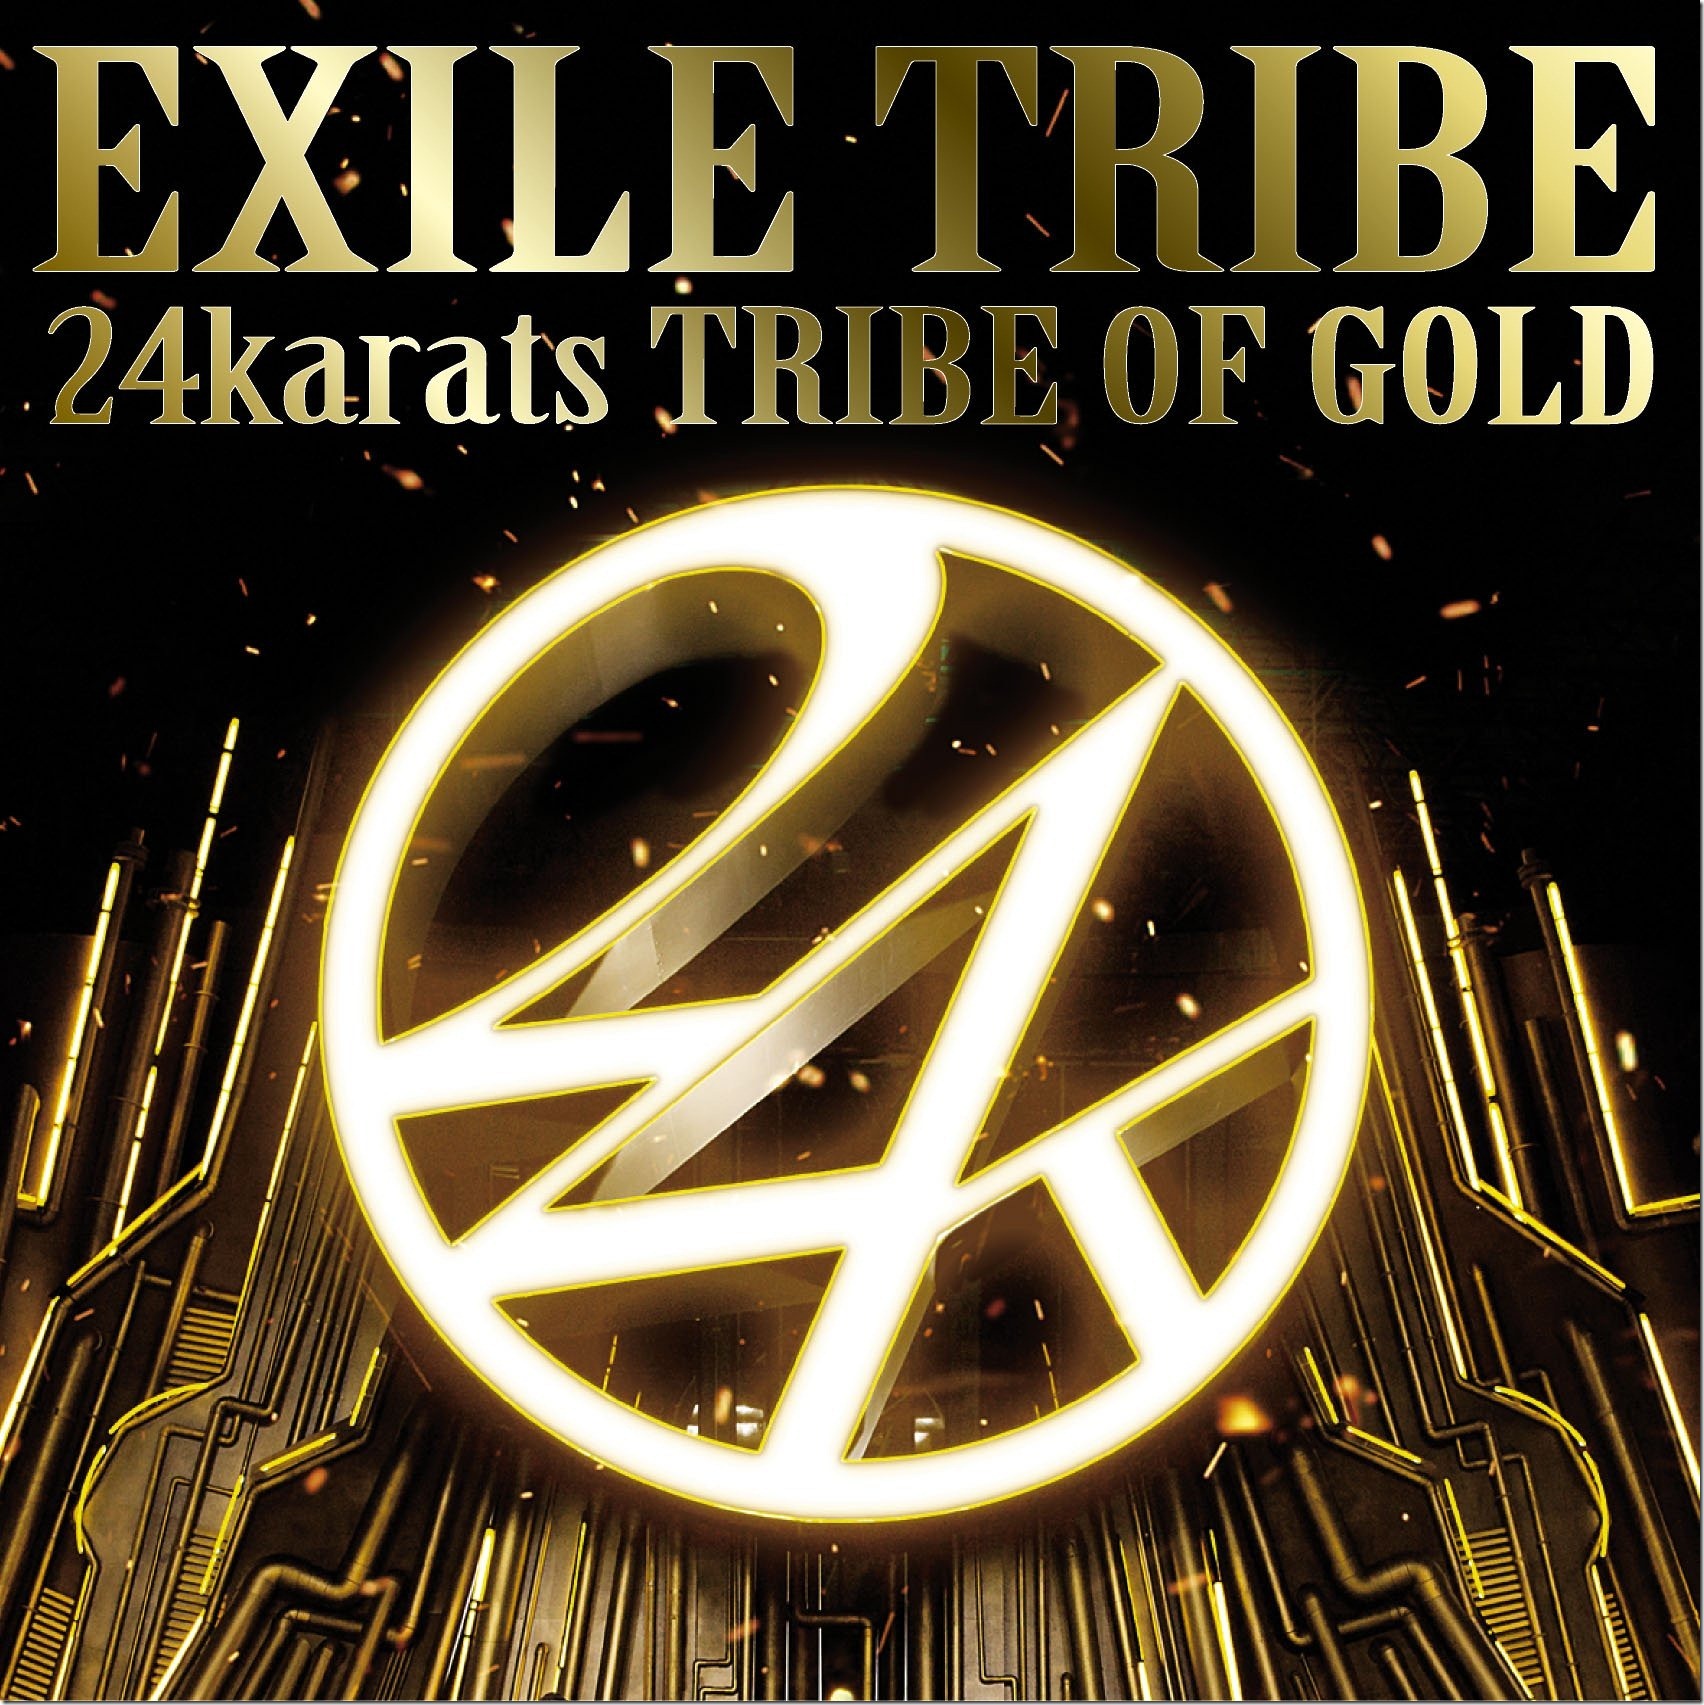 24karats TRIBE OF GOLD | EXILE TRIBE Wiki | Fandom